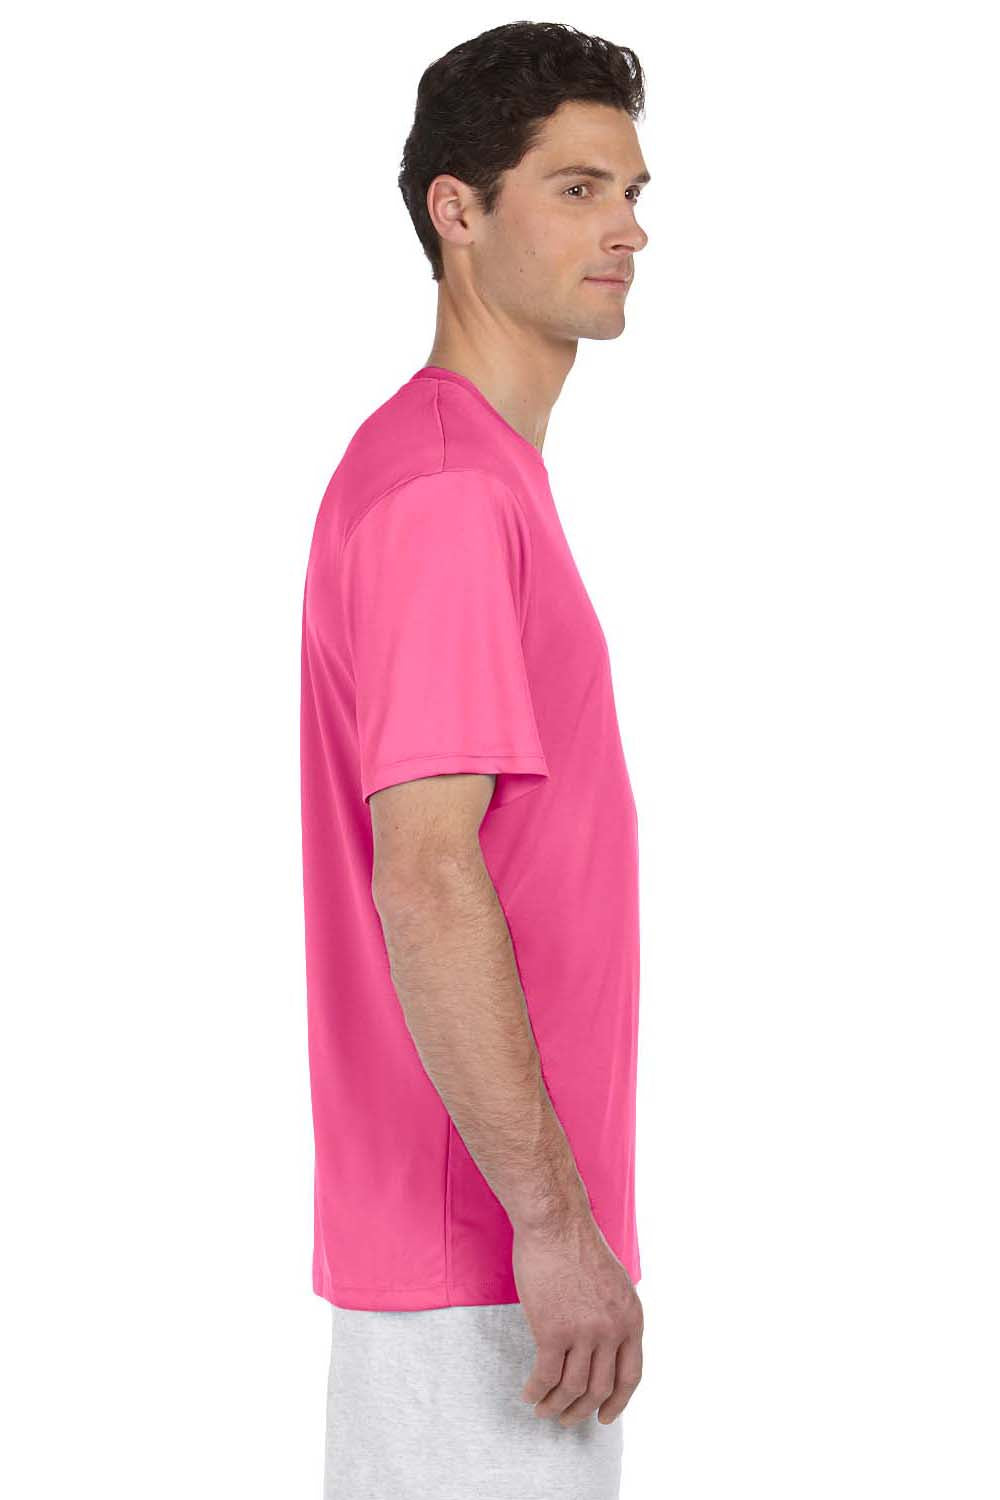 Hanes 4820 Mens Cool DRI FreshIQ Moisture Wicking Short Sleeve Crewneck T-Shirt Wow Pink Side